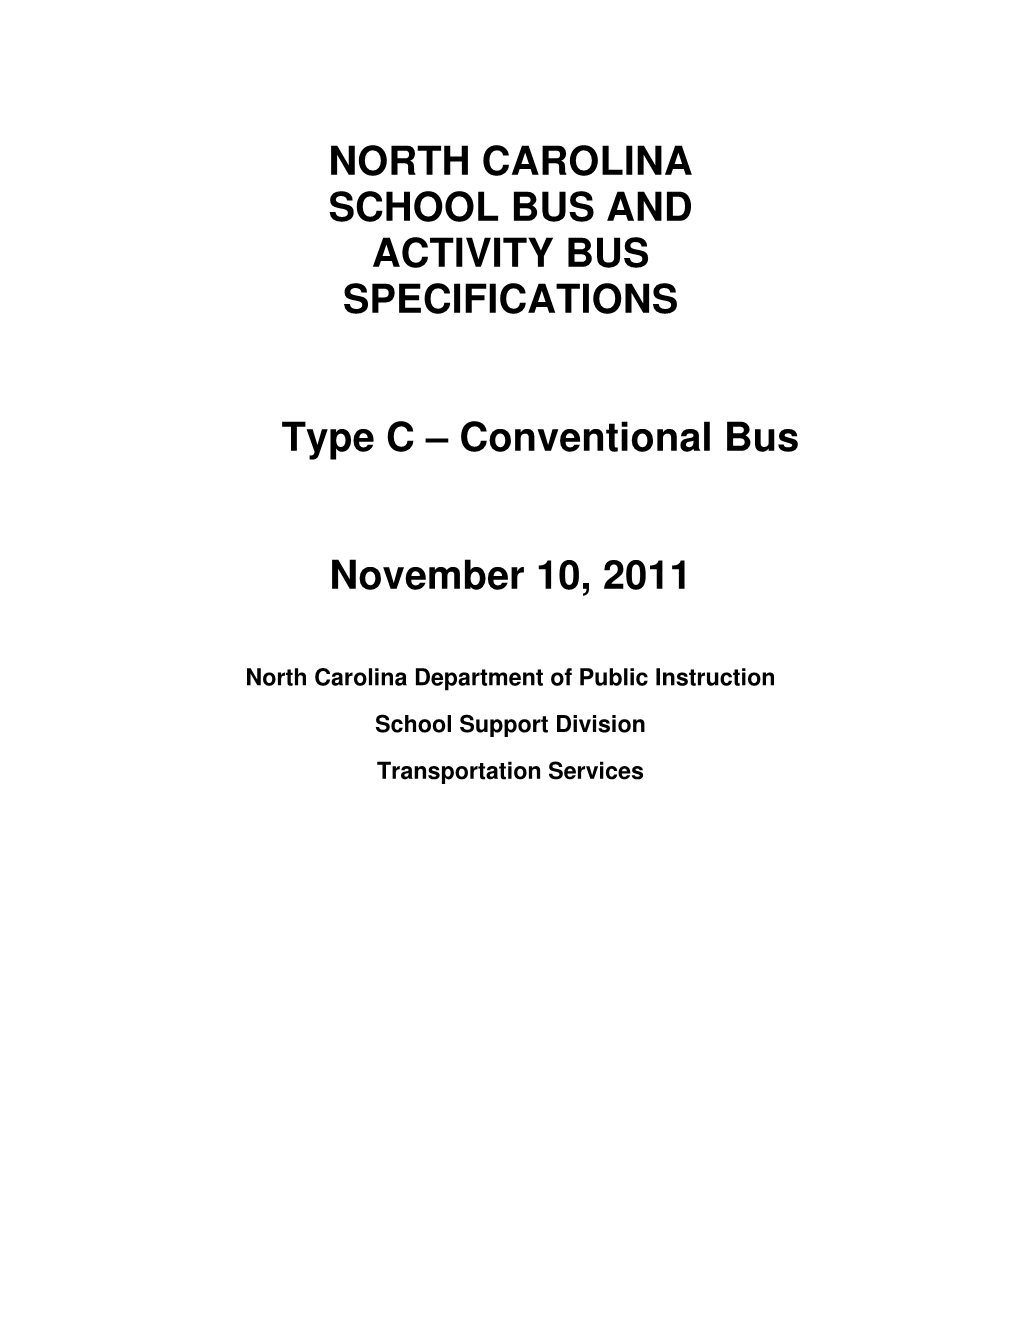 North Carolina School Bus and Activity Bus Specifications